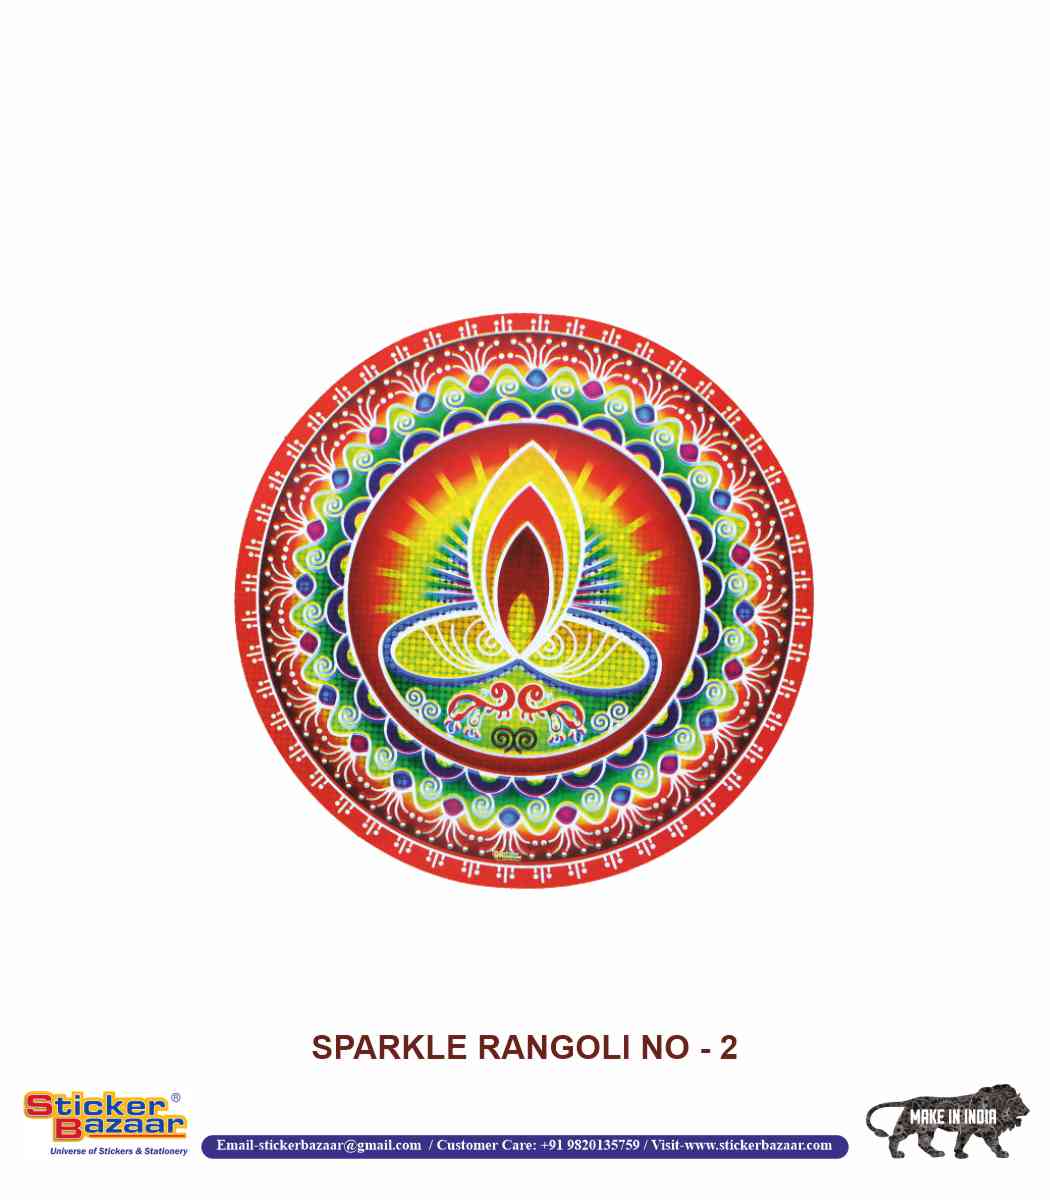 Sticker Bazaar Holo Rangoli SR4